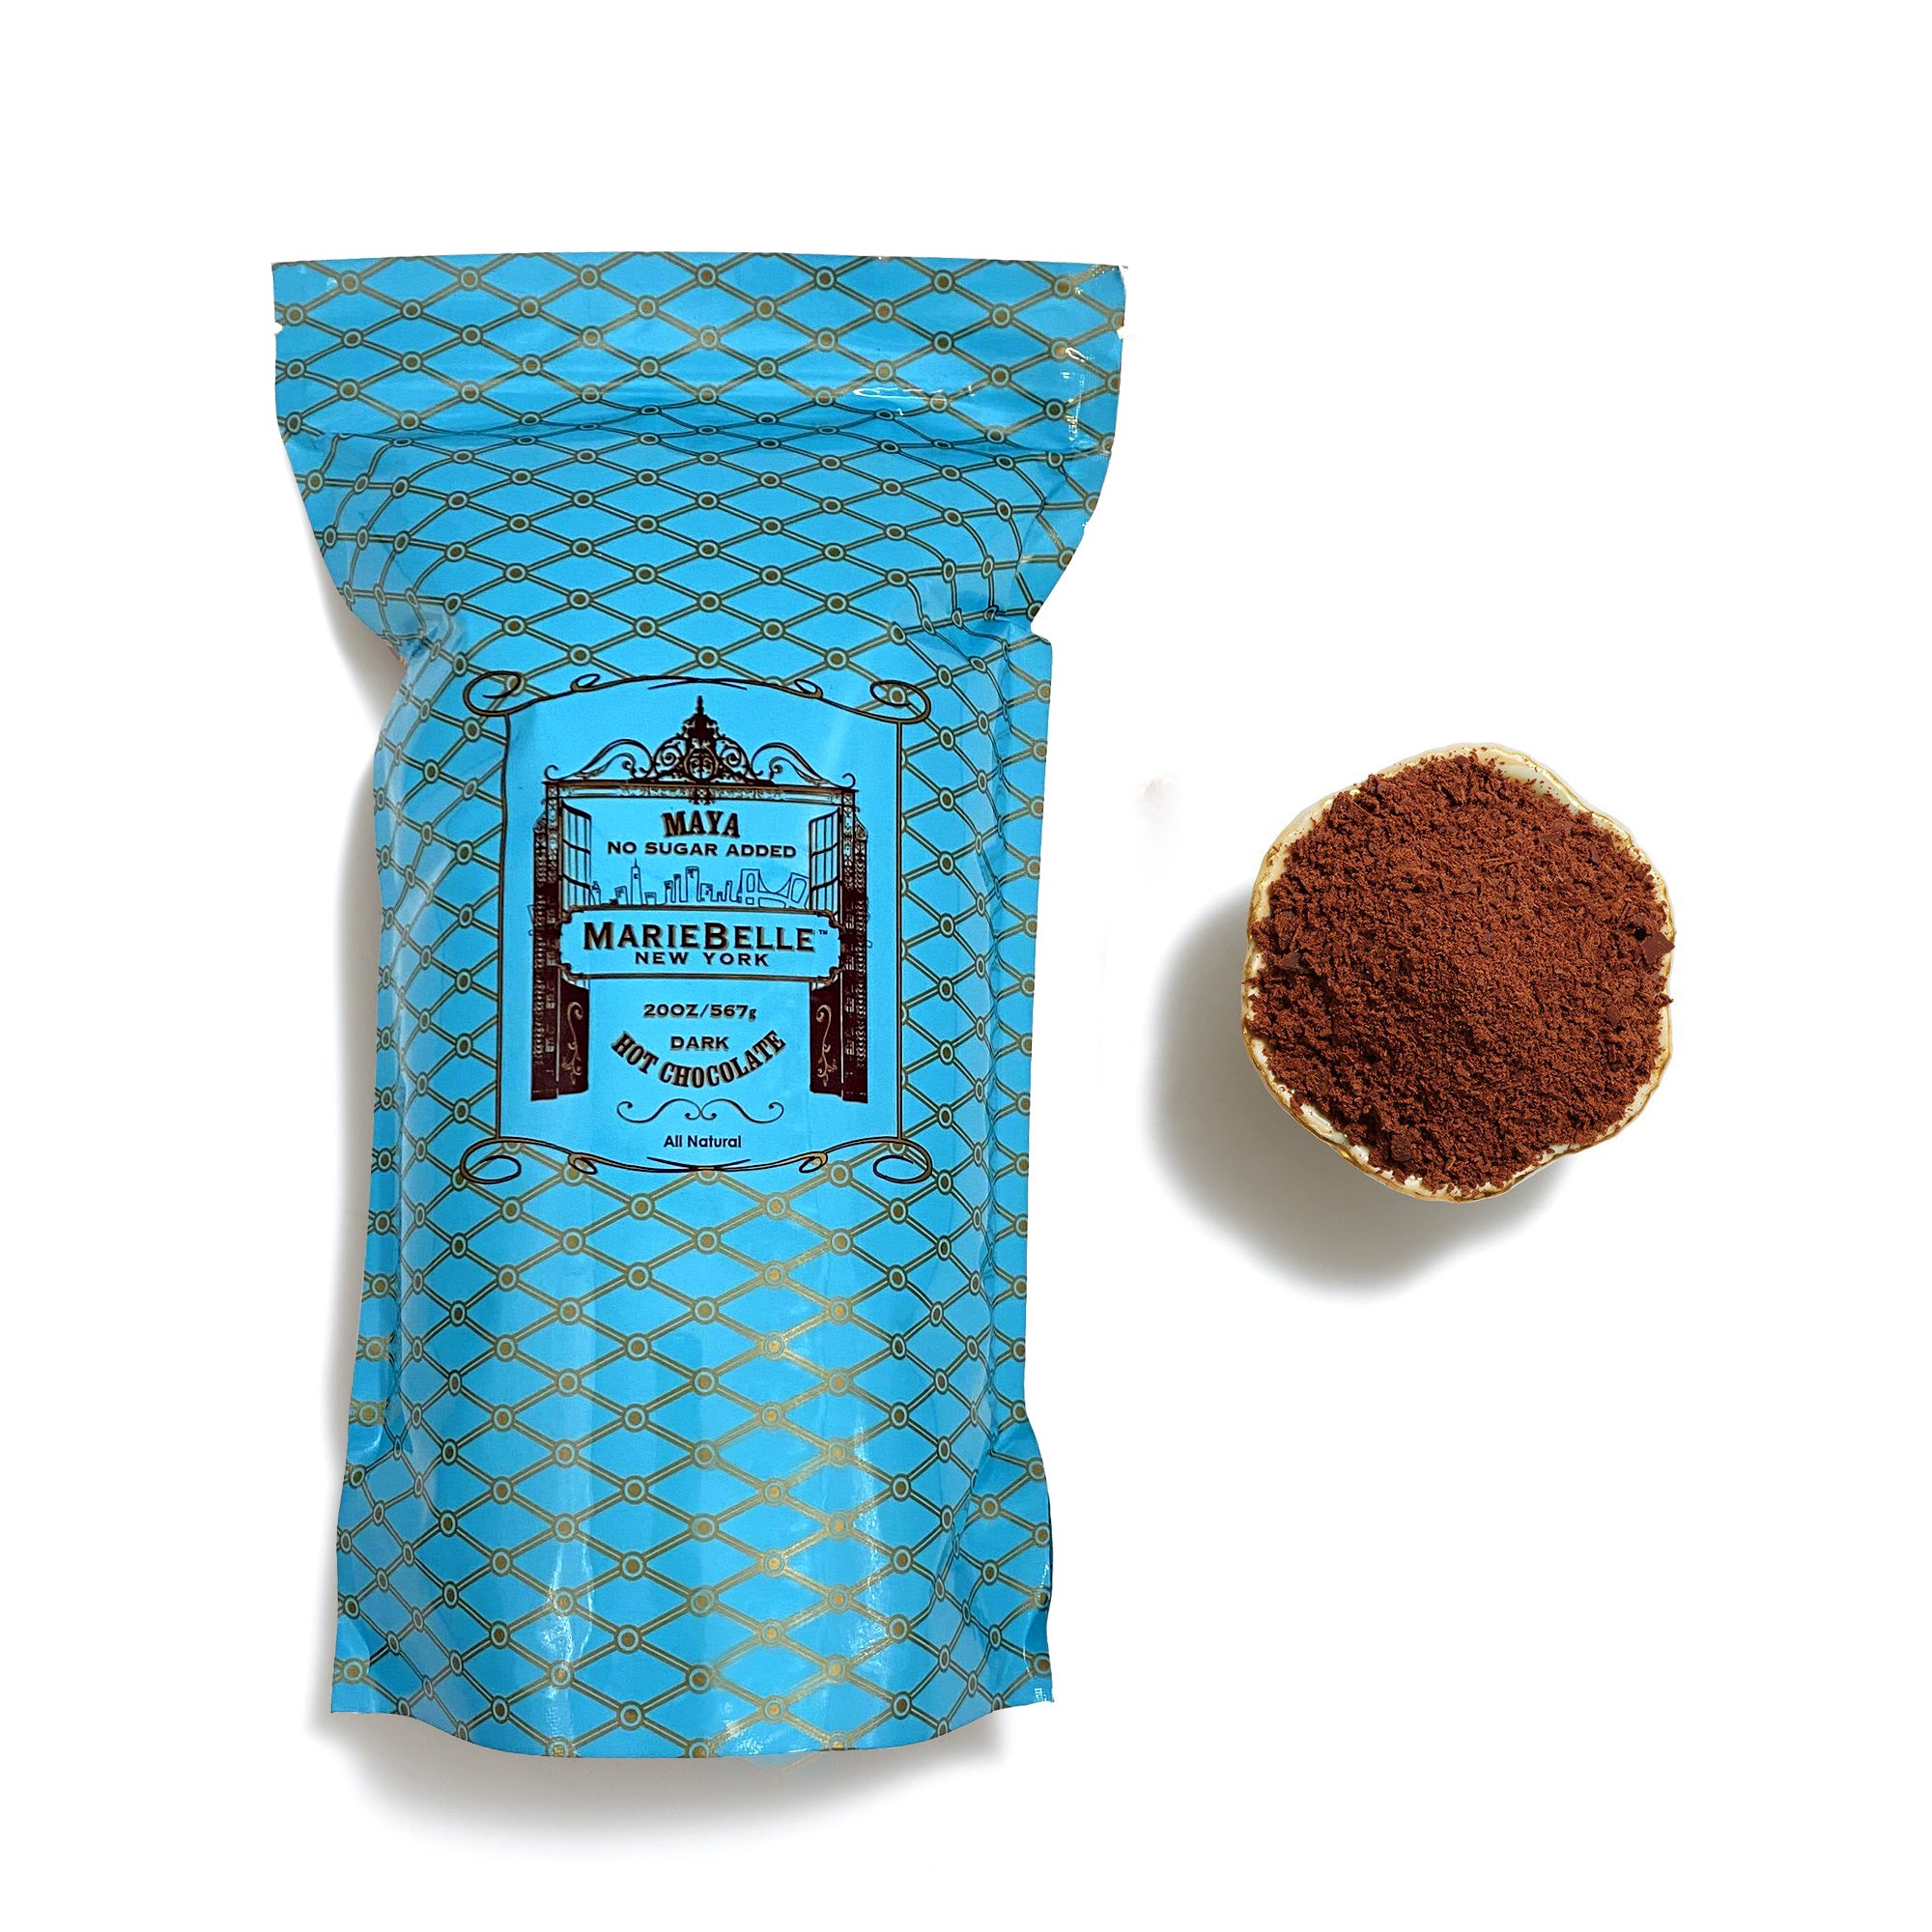 20oz Maya Hot Chocolate Refill Bag - No Sugar added